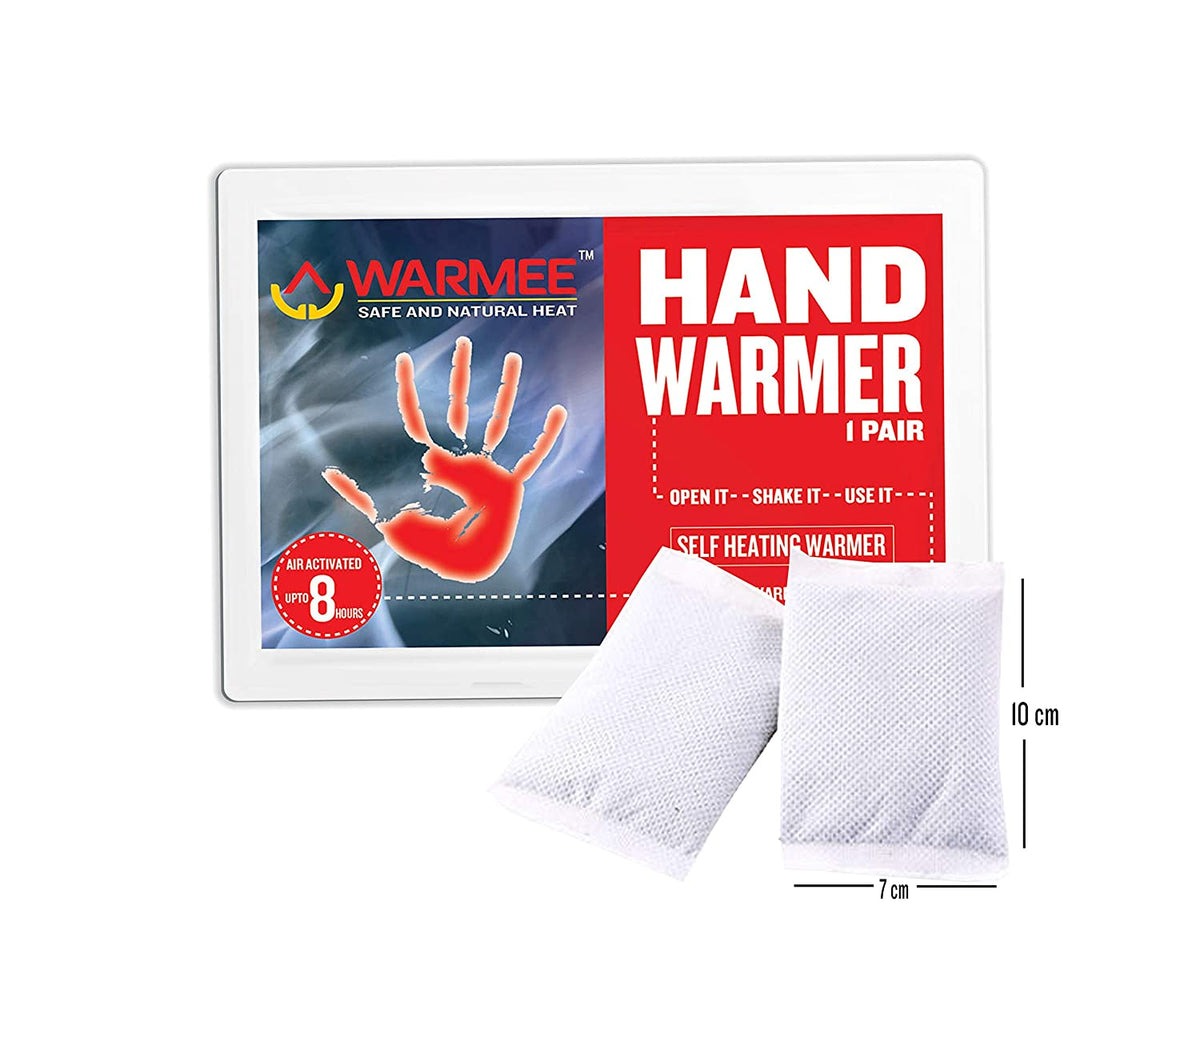 Body Warmer Variety Pack